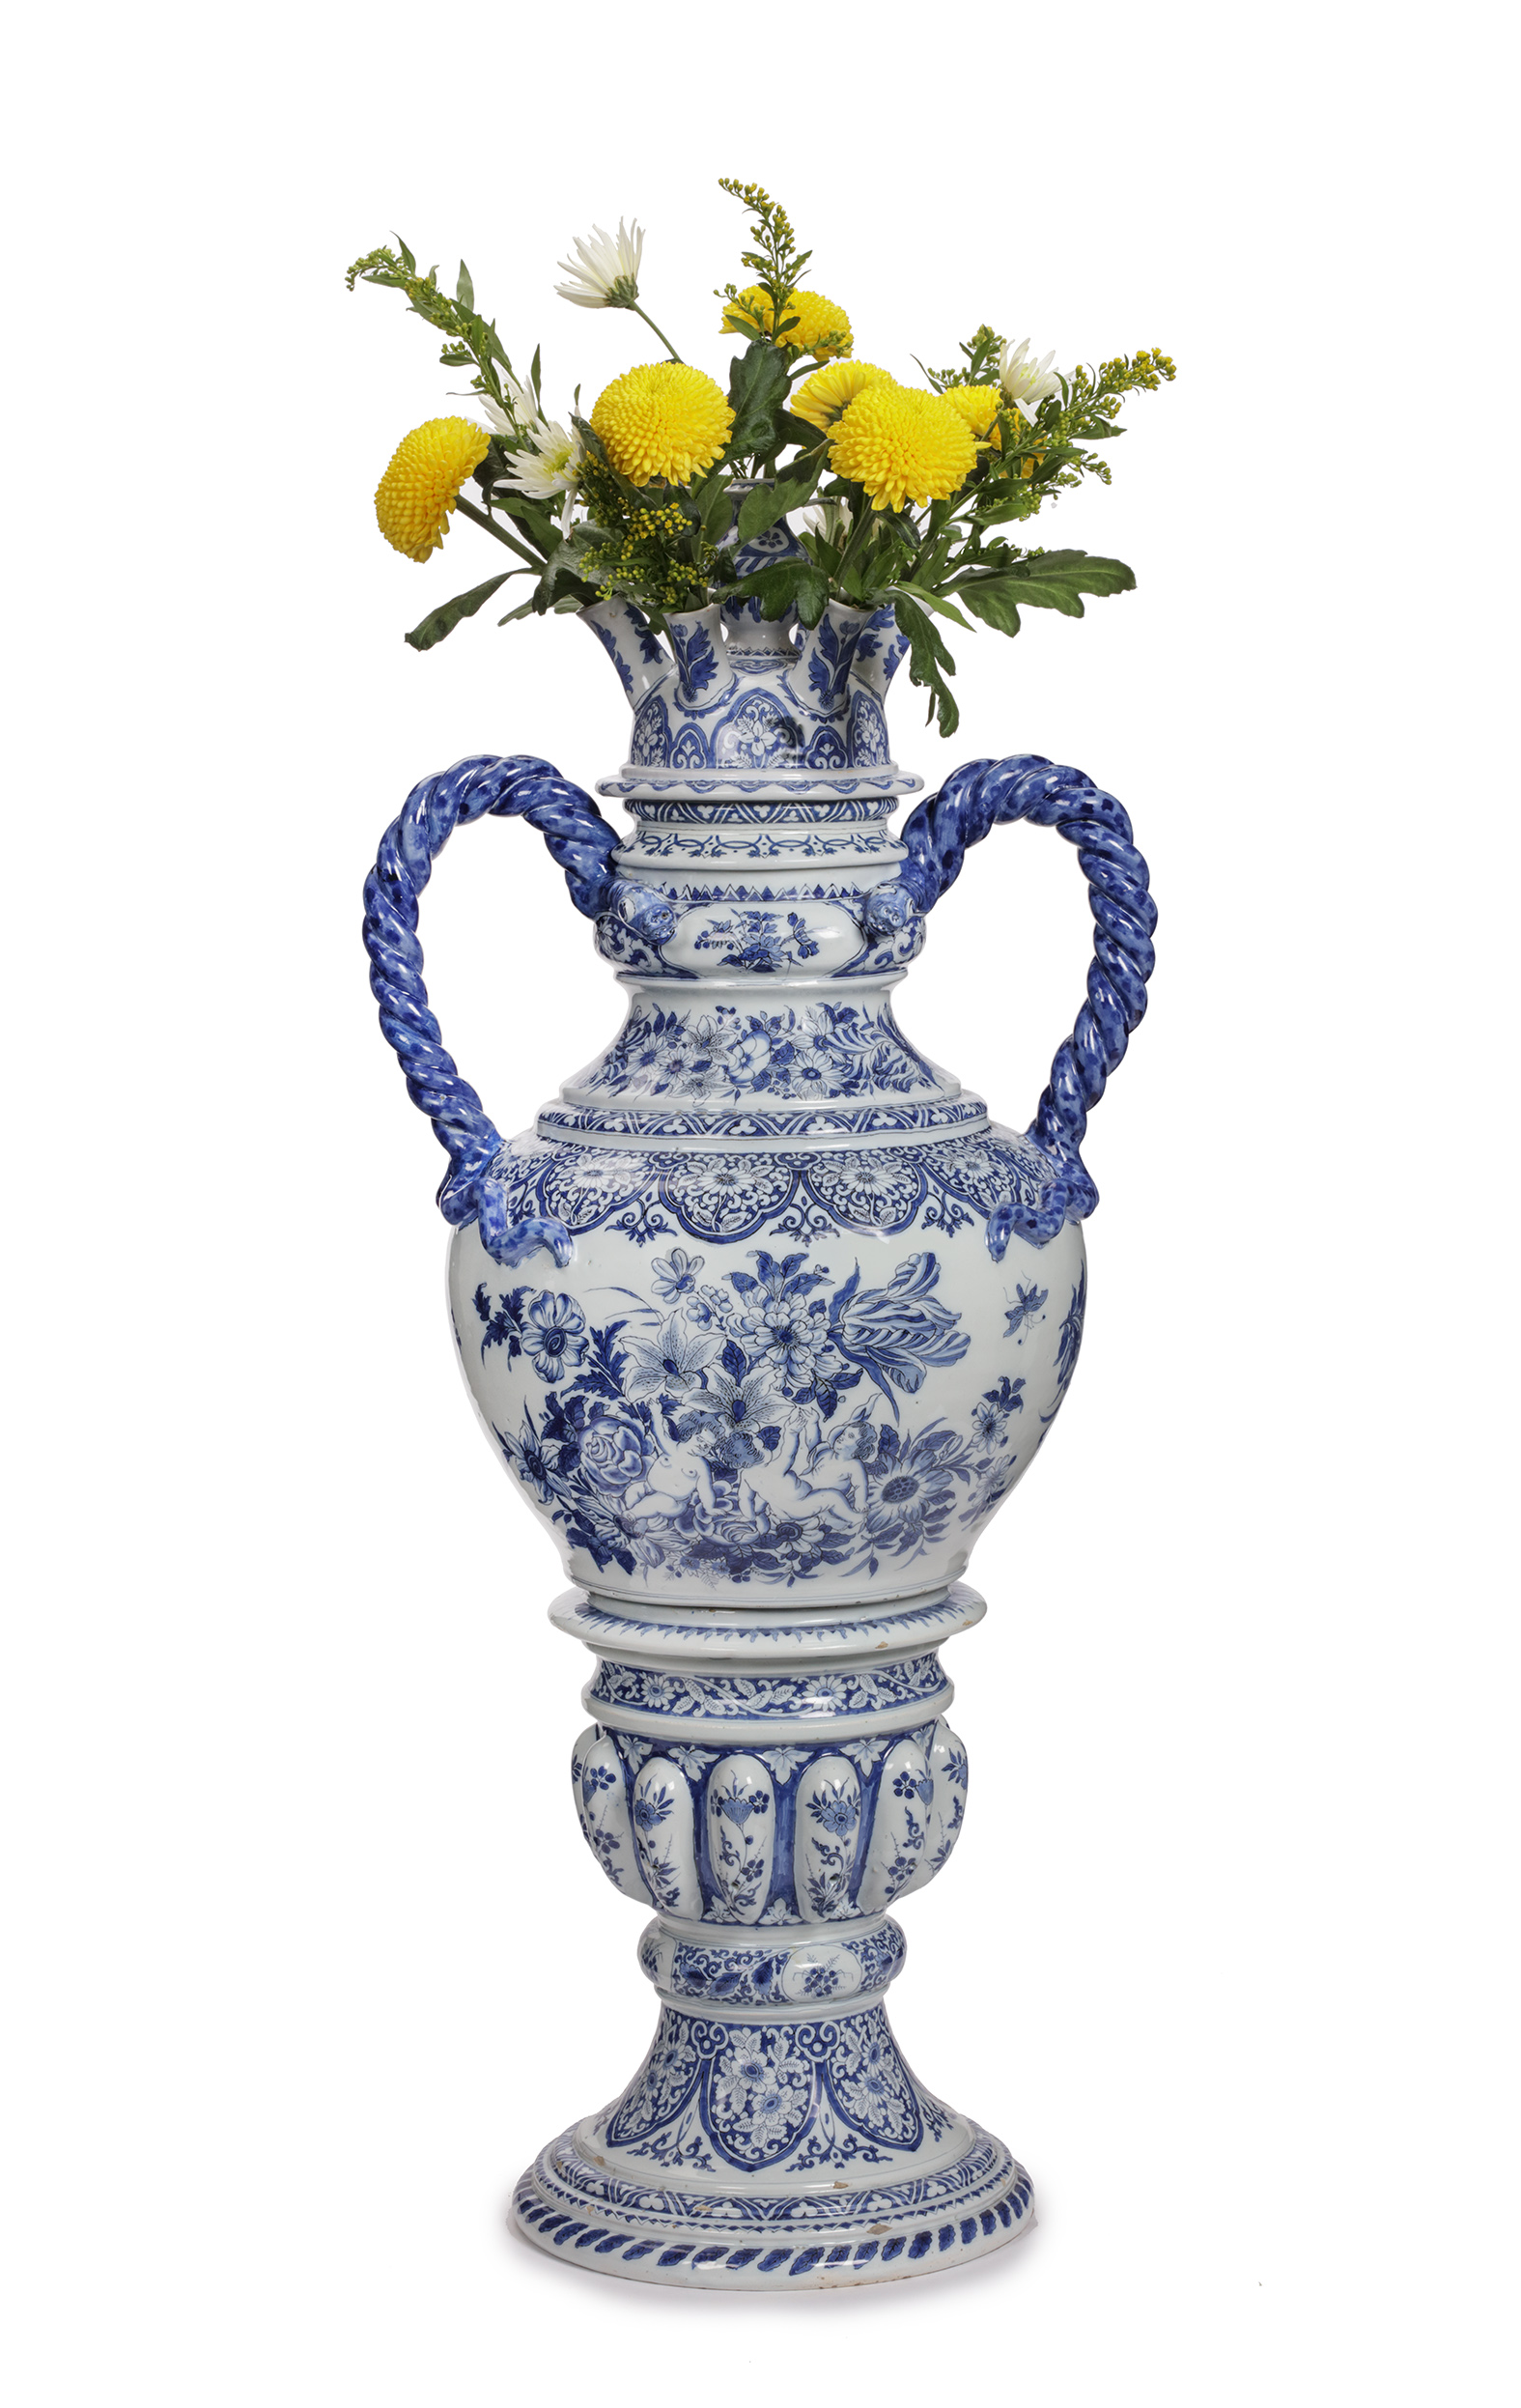 •D2391. Monumental Blue and White Decorative Flower Vase